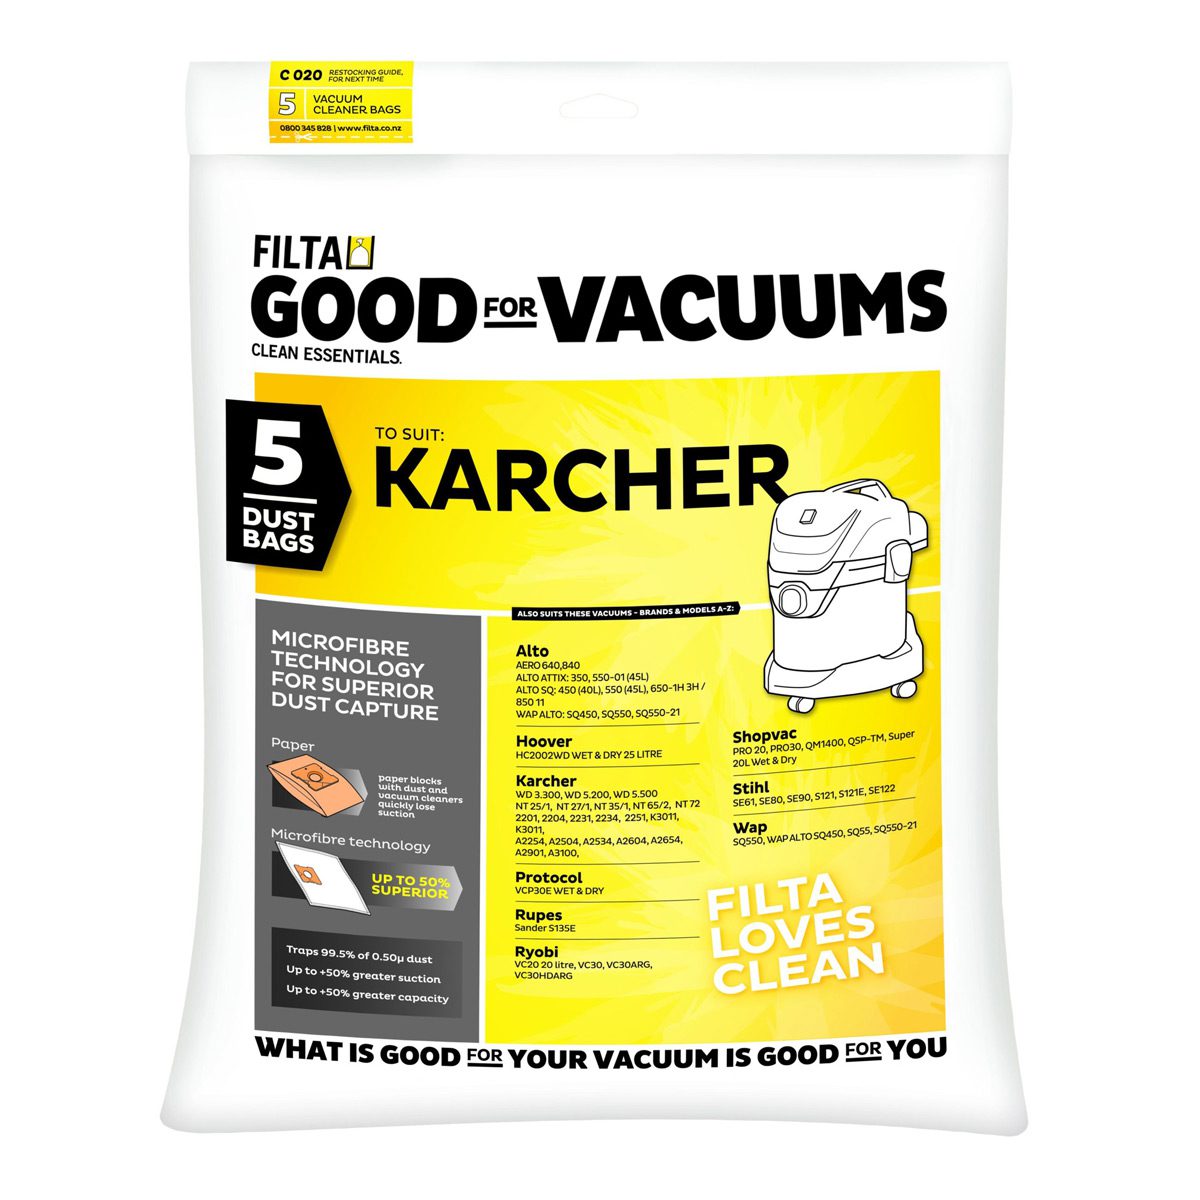 machinery-matting-vac-bags-microfibre-vacuum-bag-for-nt25/1-karcher-5-pack-ms-multi-layered-vacuum-dust-bags-wet-and-dry-vacuums-work-shop-vacuums-tough-high-performance-vjs-distributors-20072